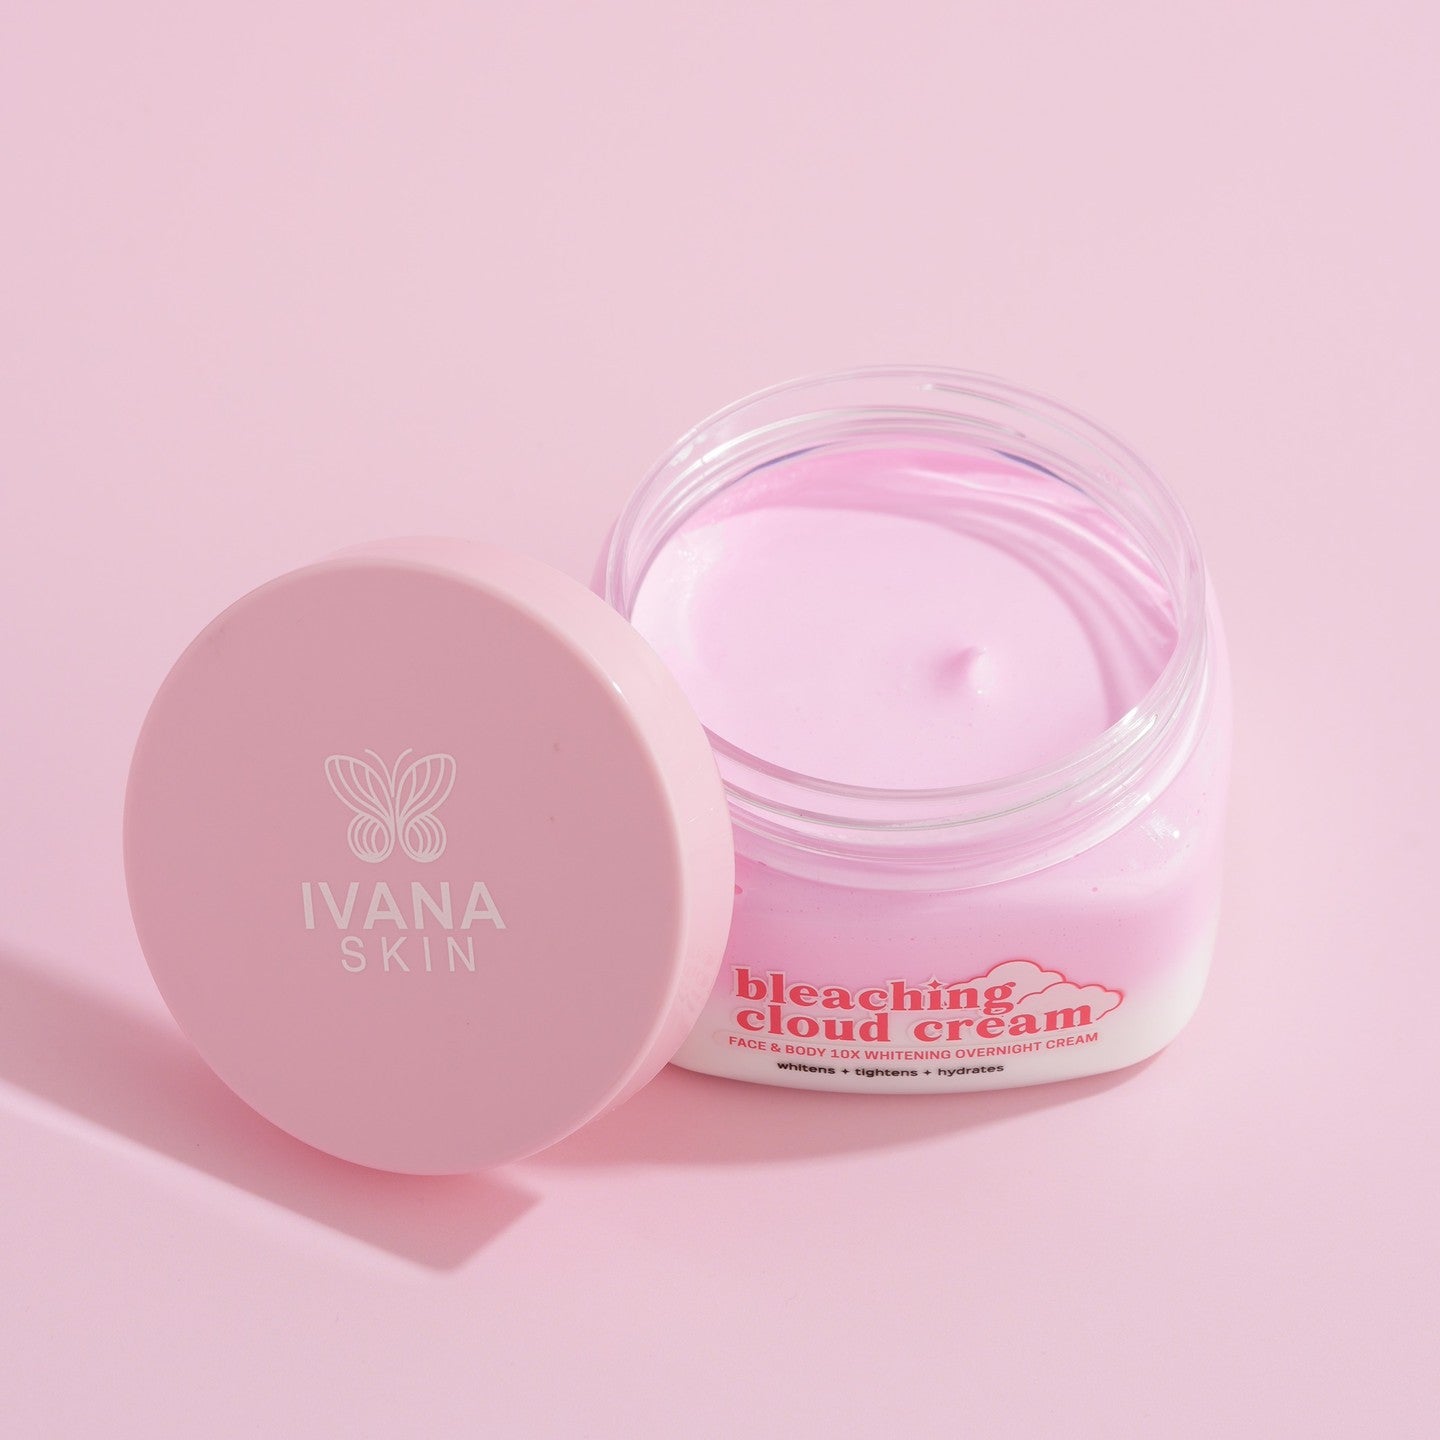 Ivana Skin Bleaching Cloud Cream